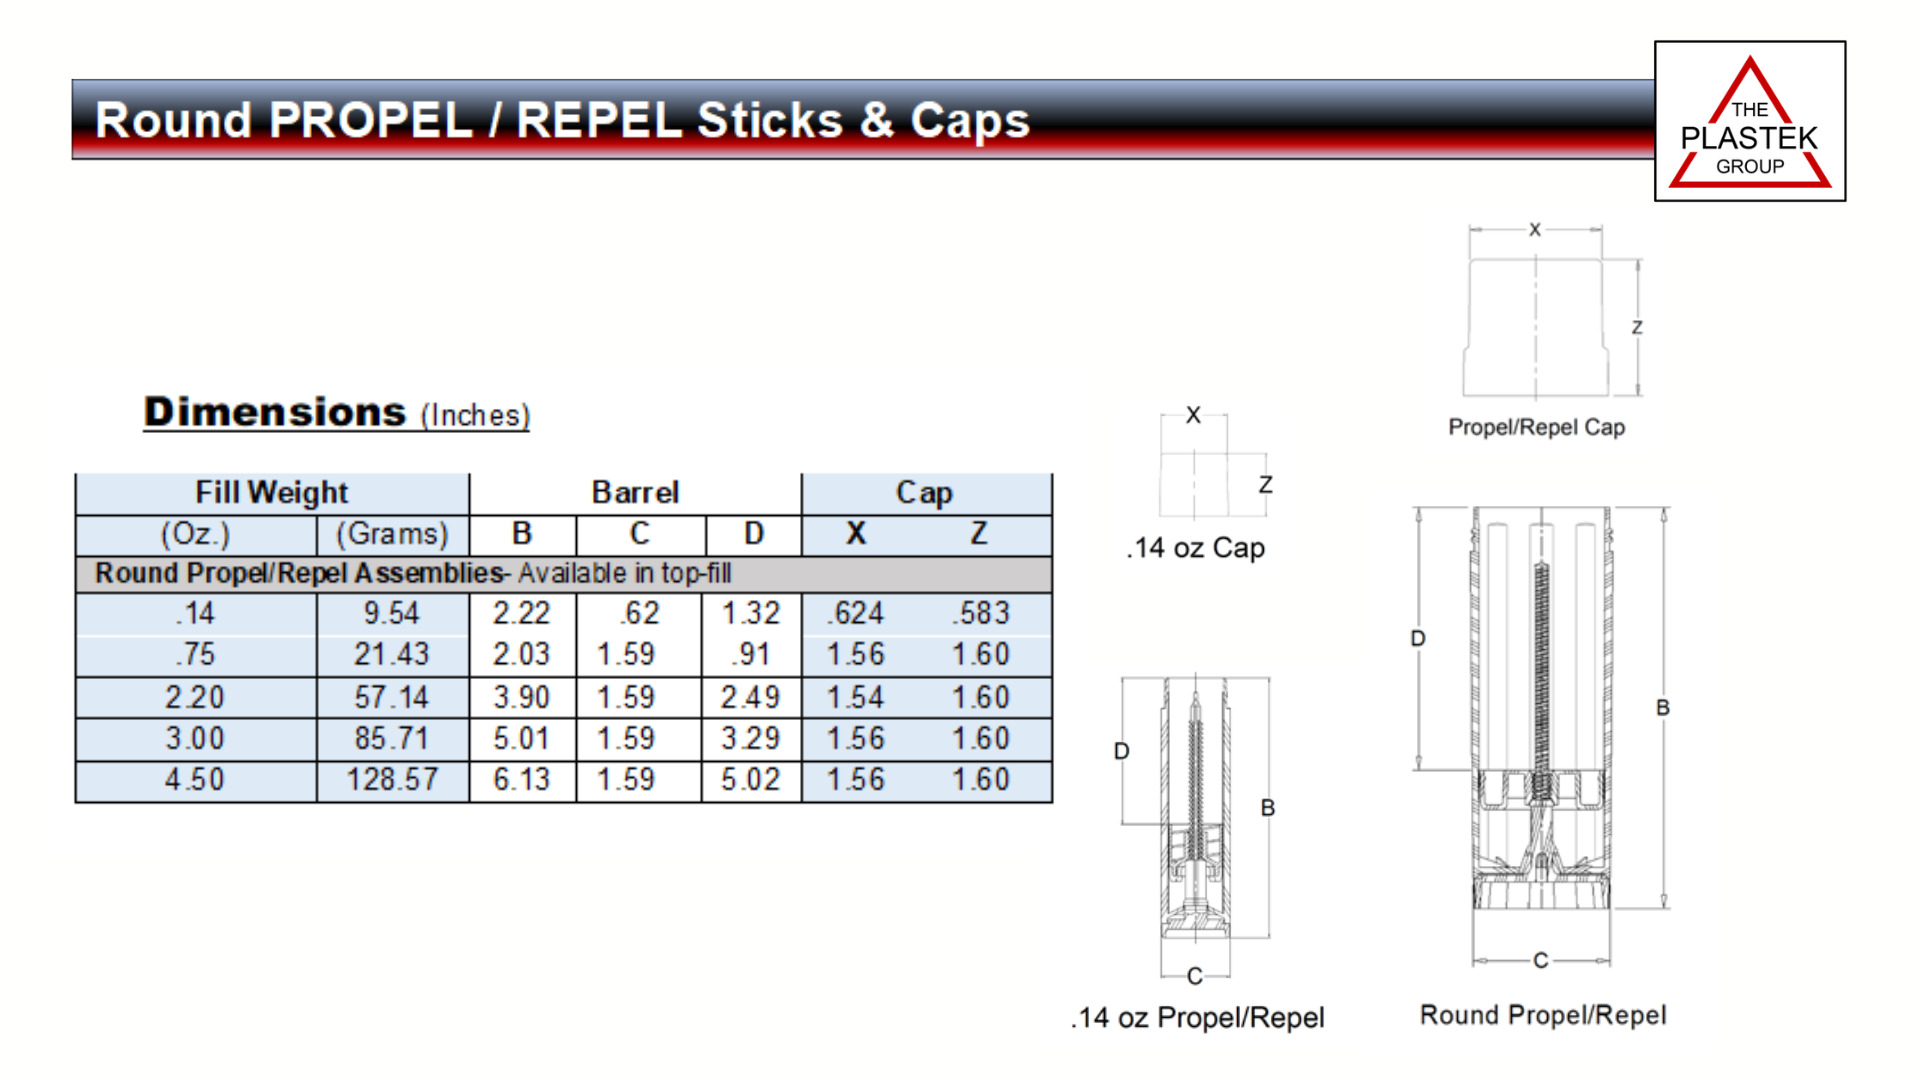 Round propel/repel stick dimensions